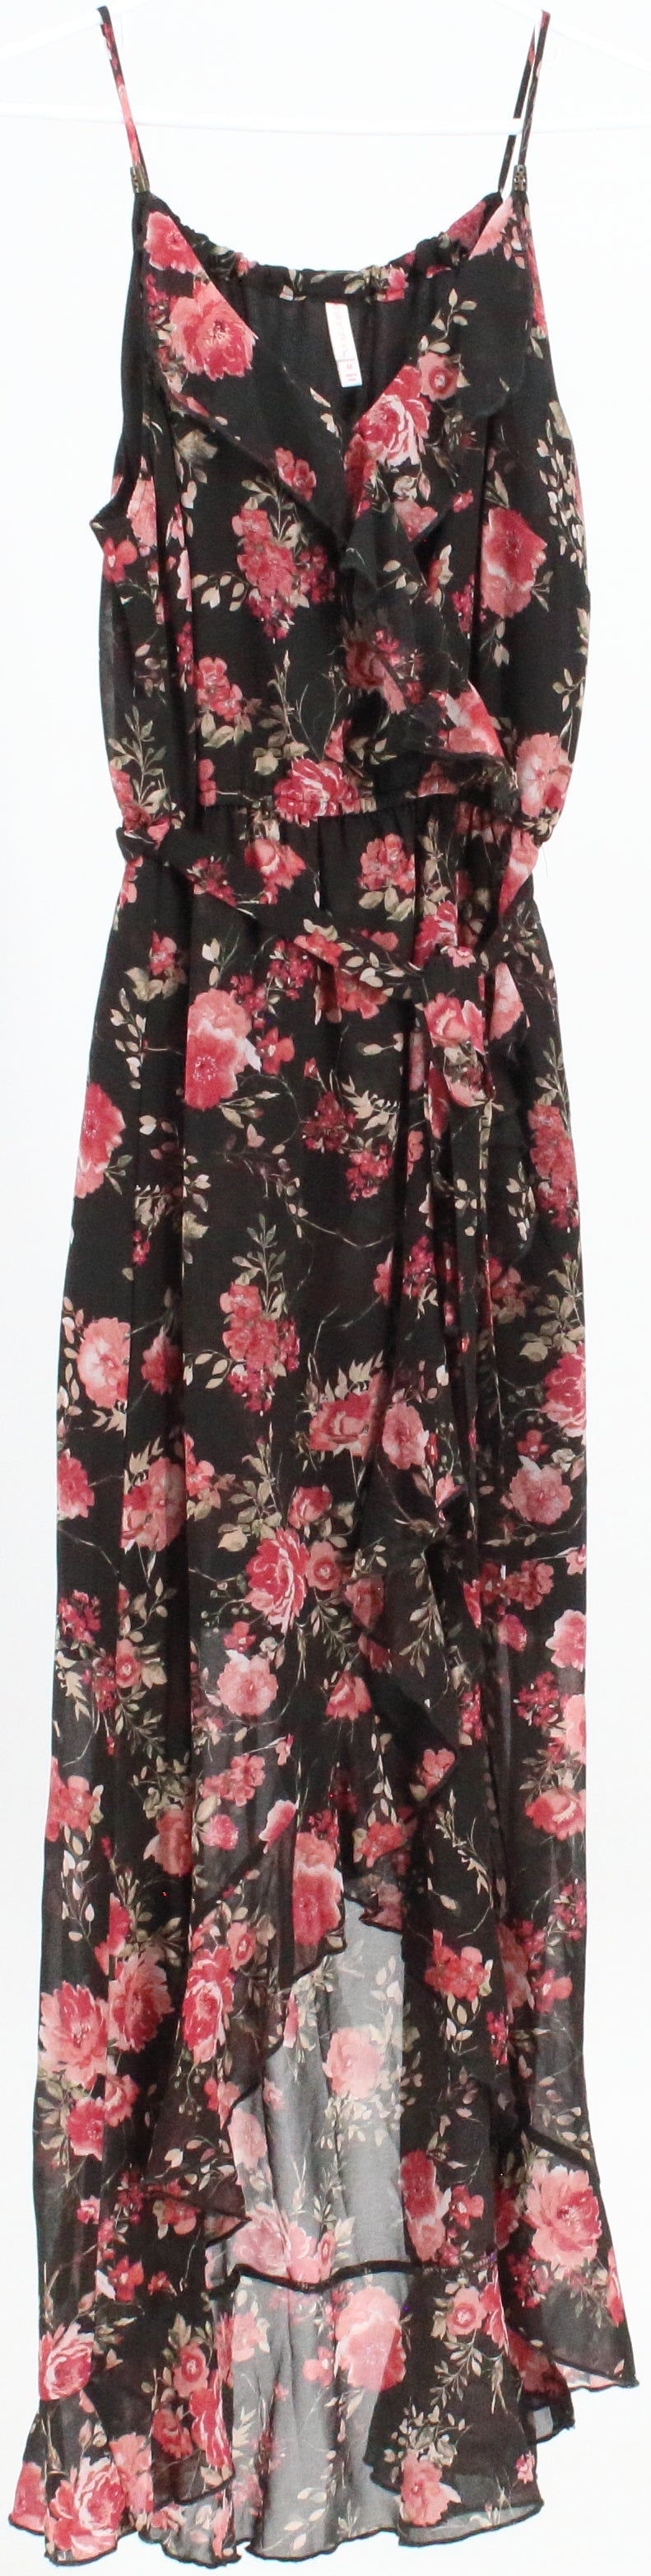 Xhilaration Black and Pink Flower Print Long Dress